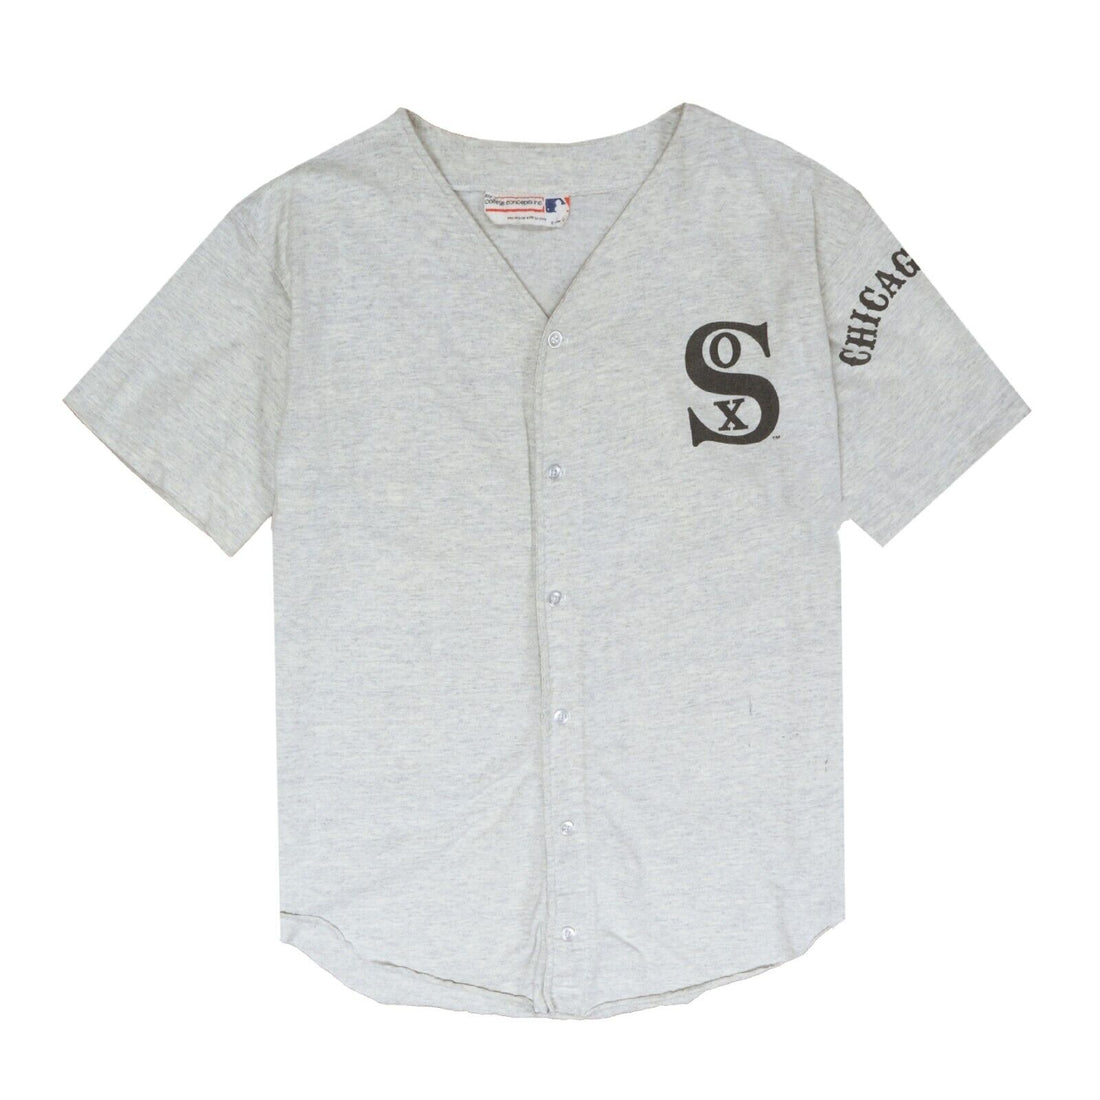 Vintage White Sox Baseball Jersey 001